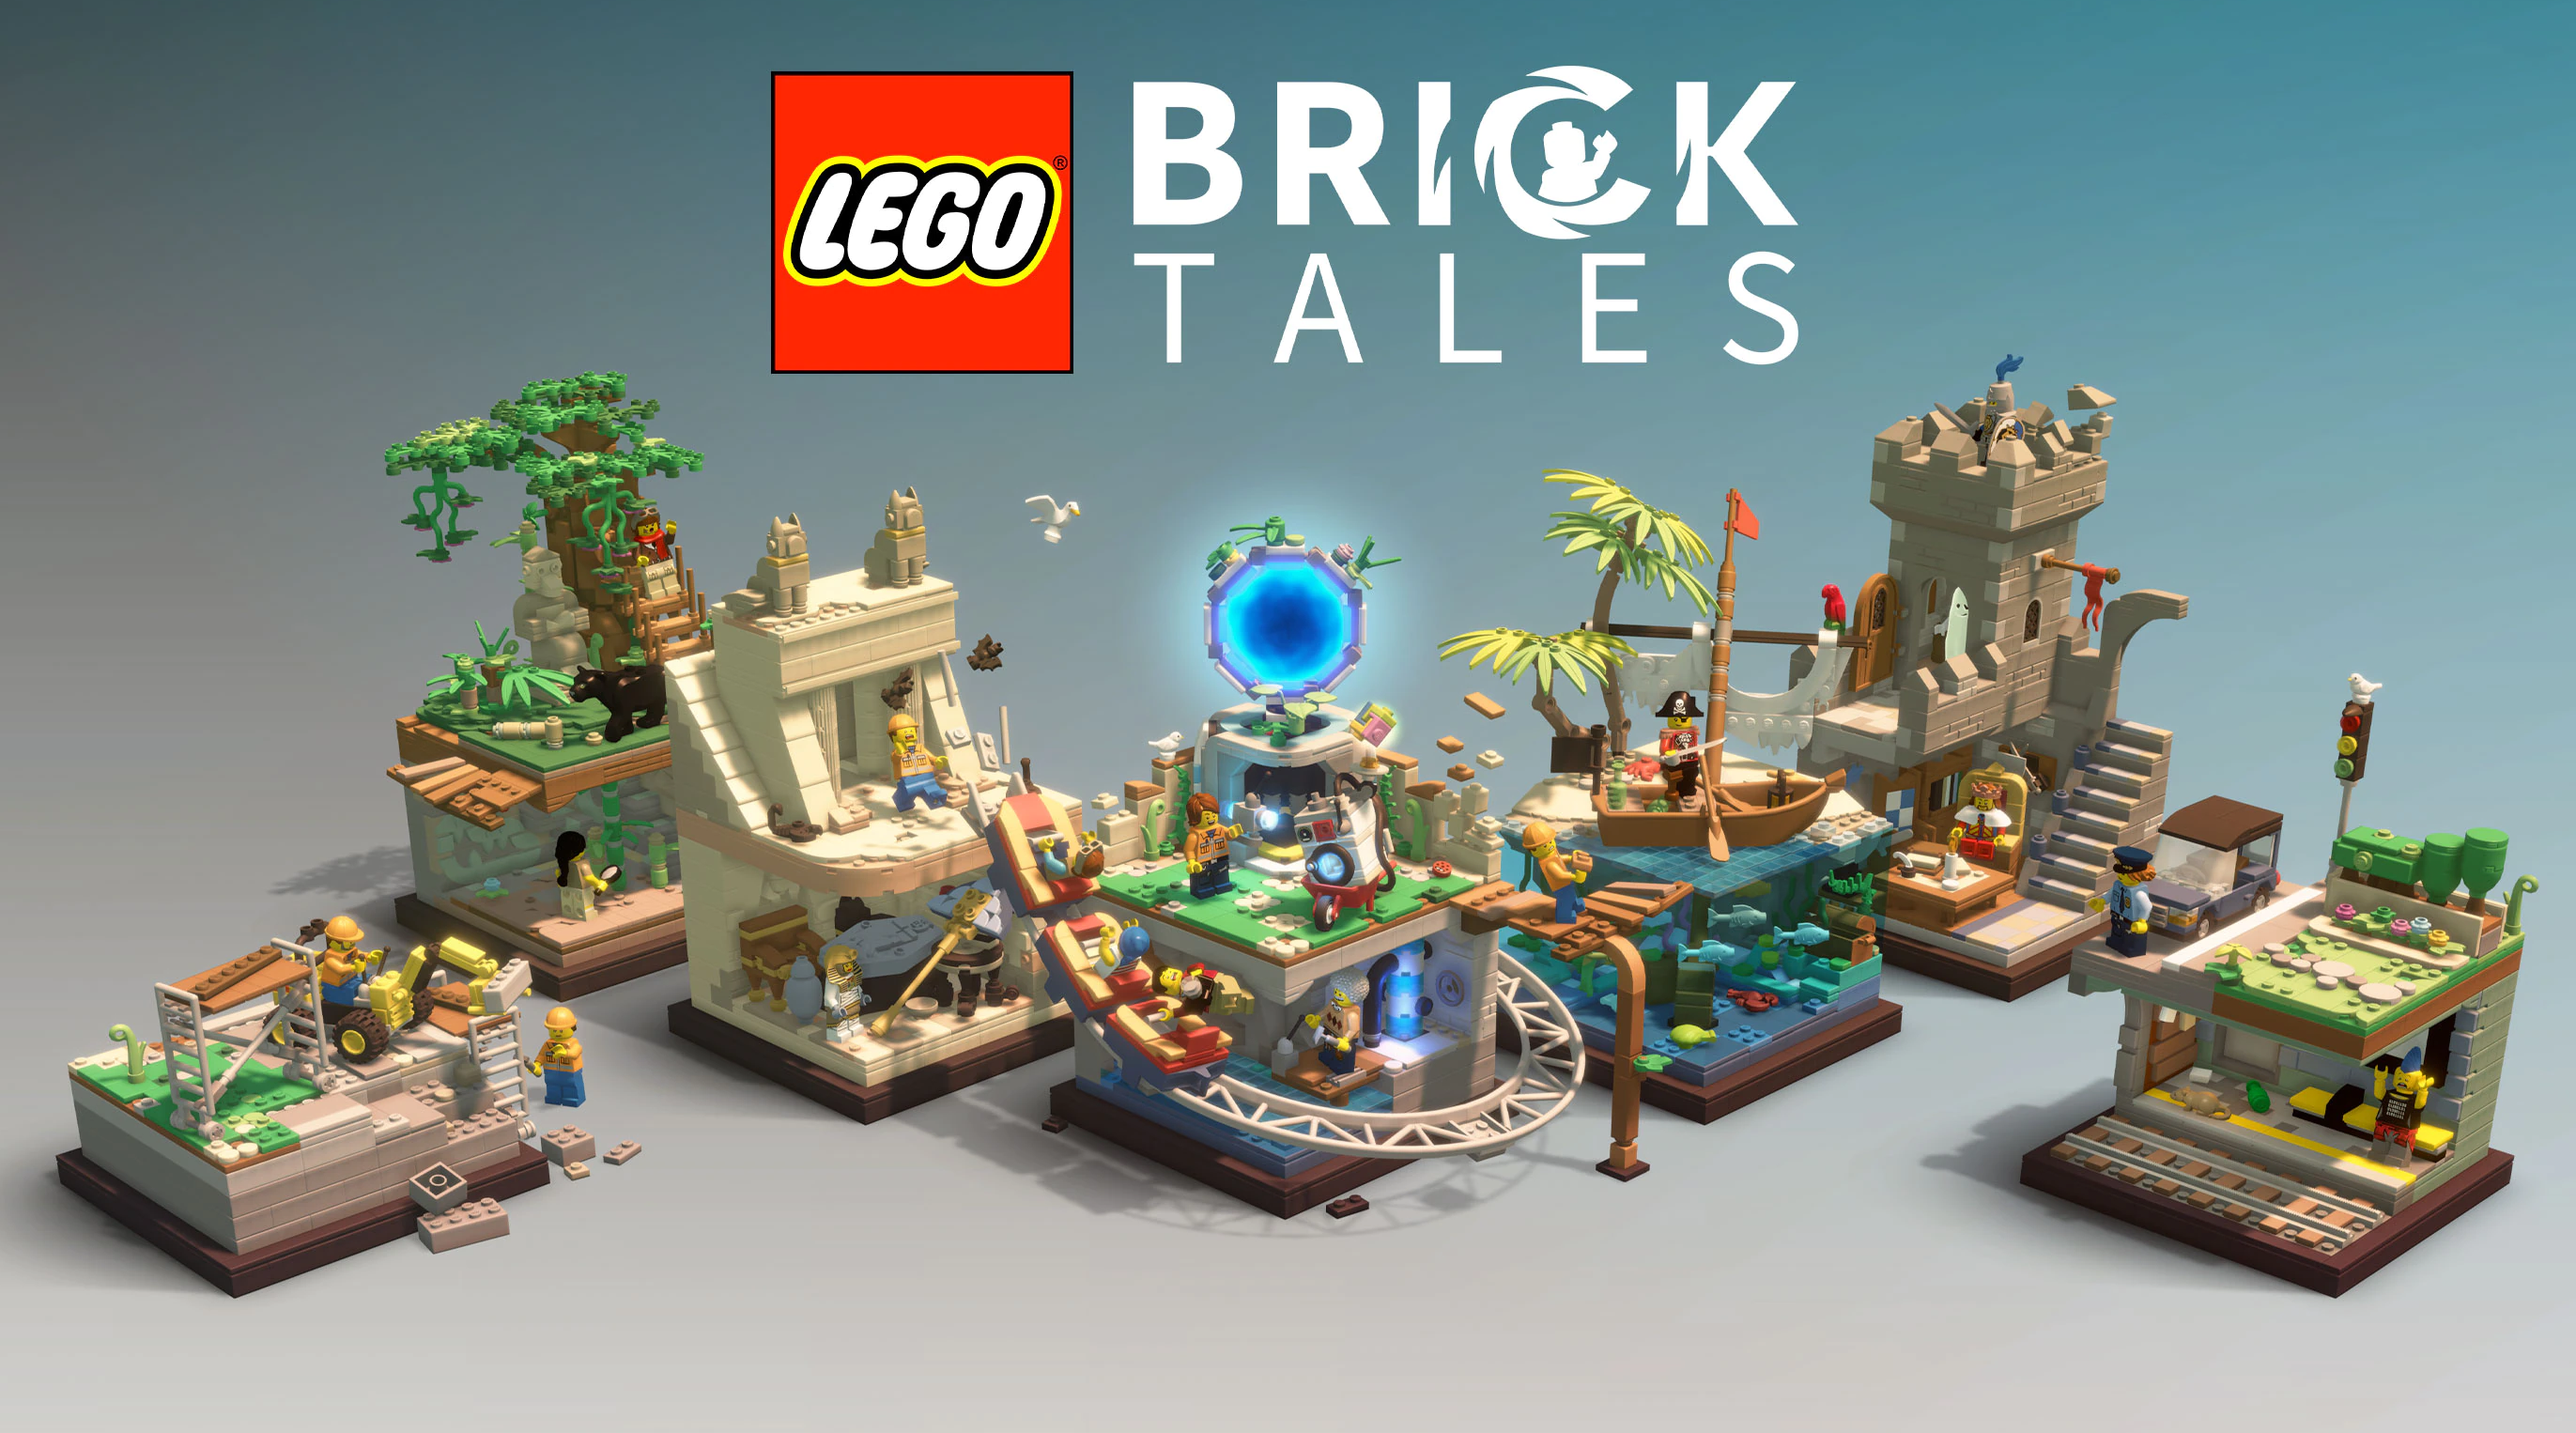 LEGO Bricktales review – Pure imagination